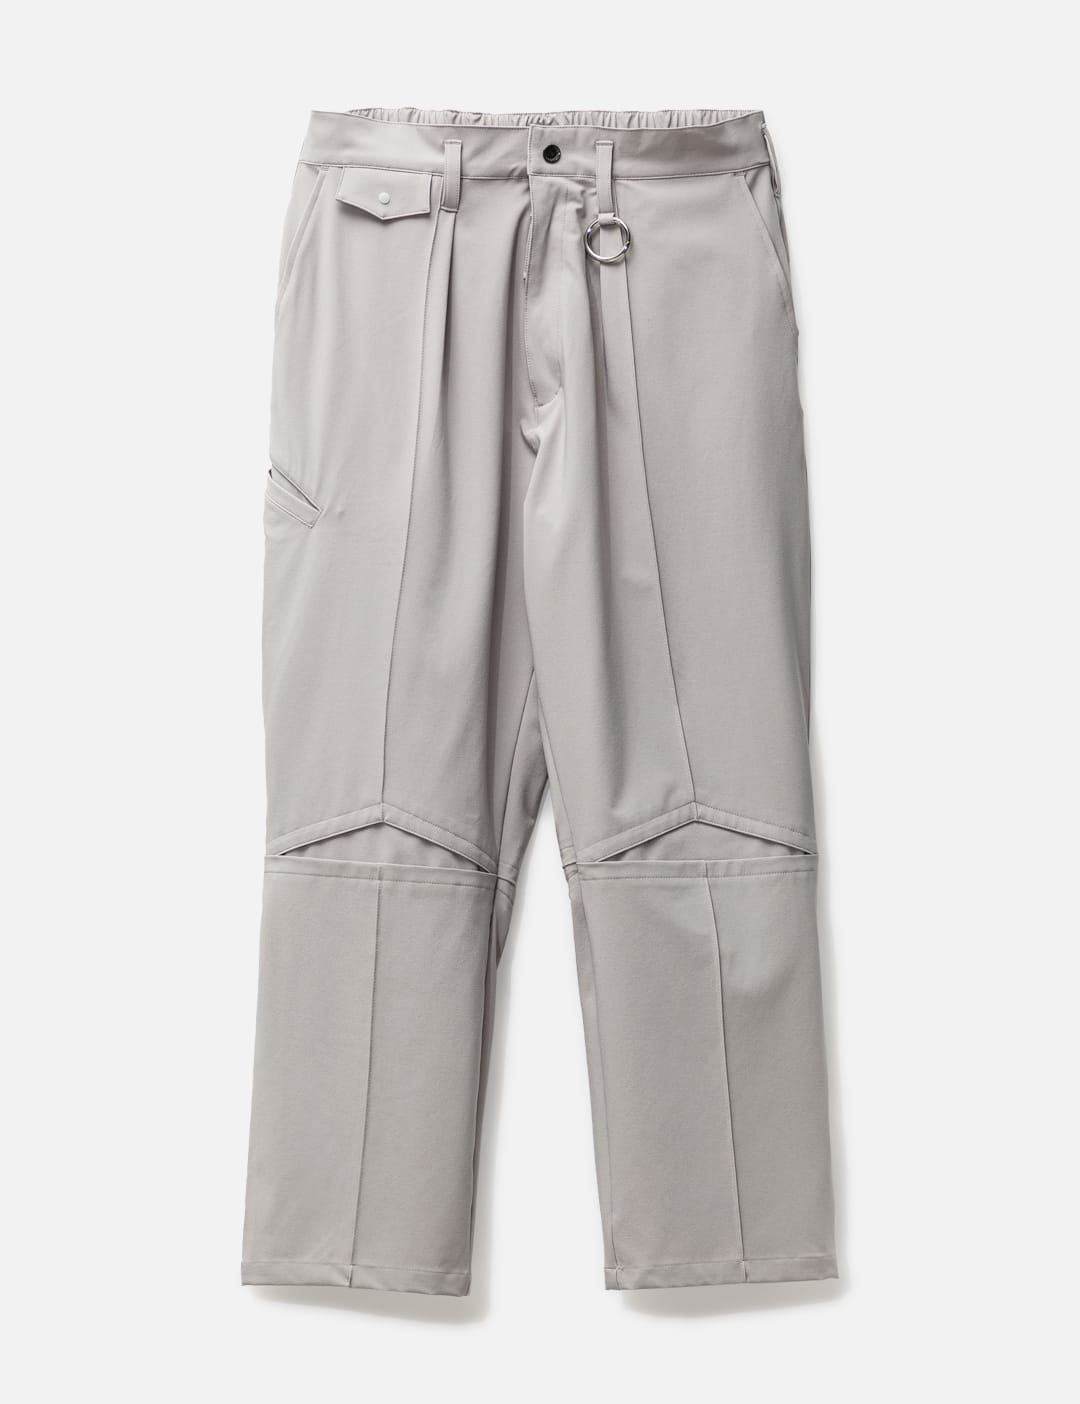 GOOPiMADE “KM-01” Regular-Fit Tailored Trousers